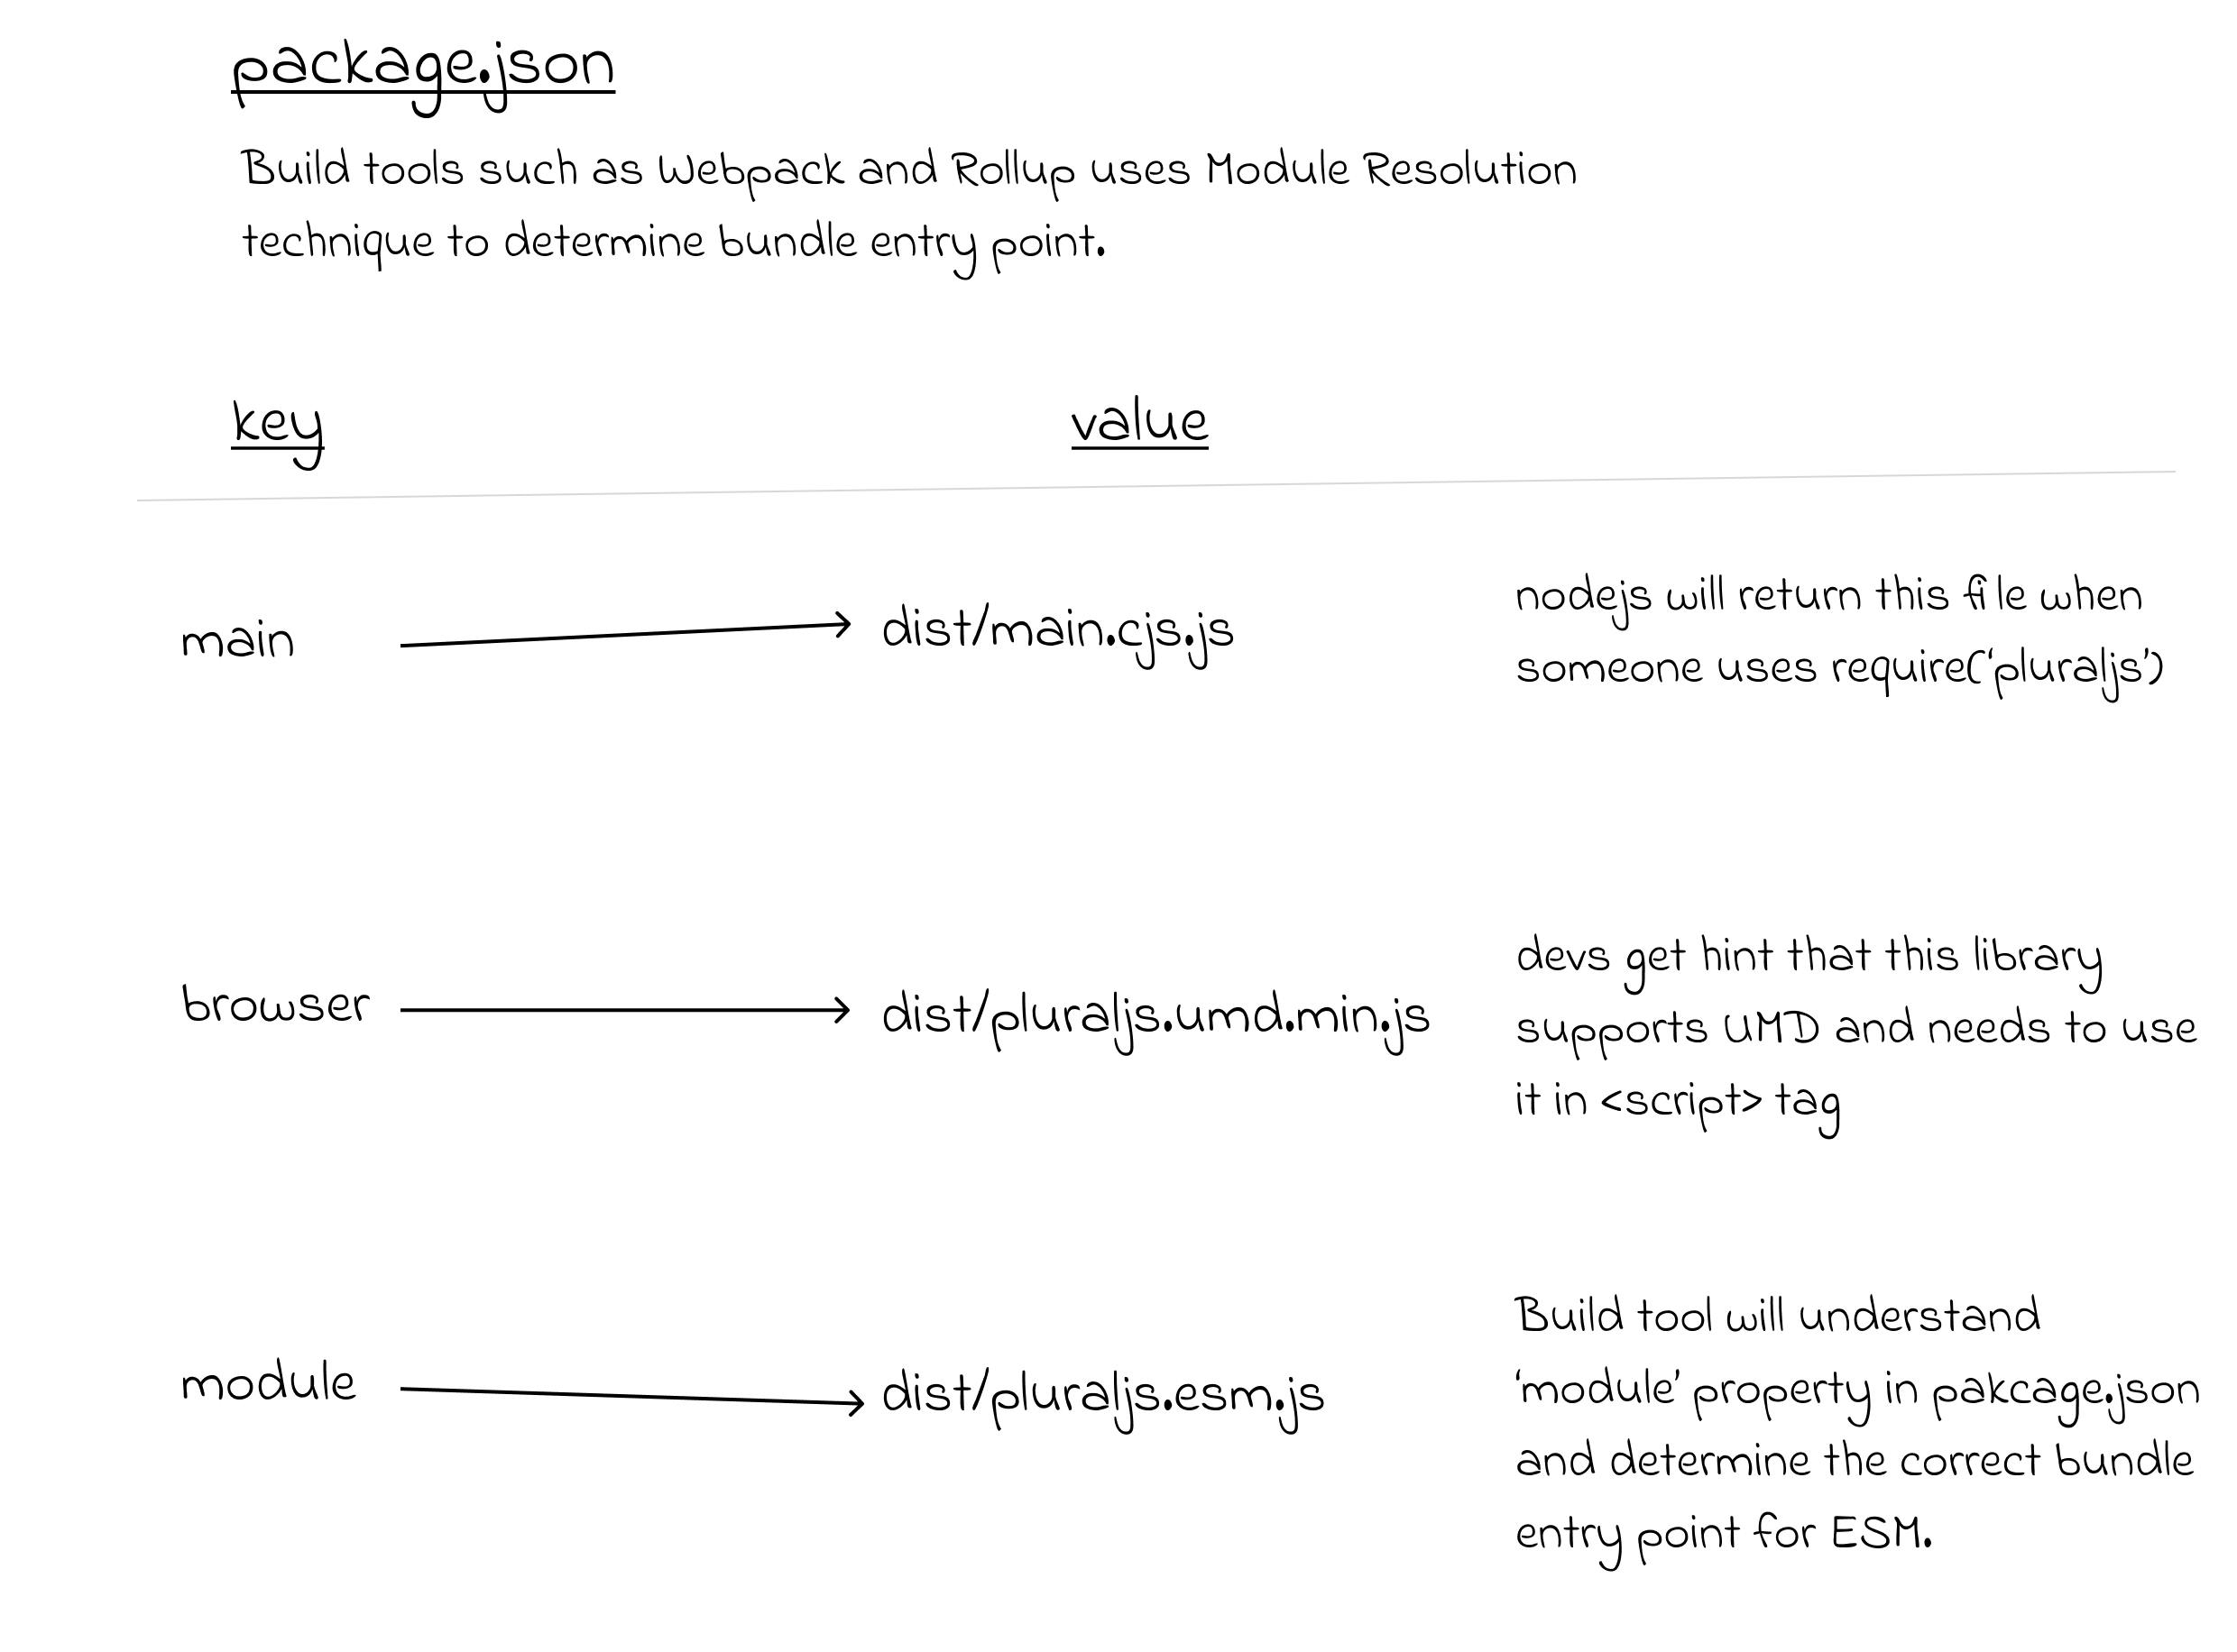 A diagram depicting module resolution